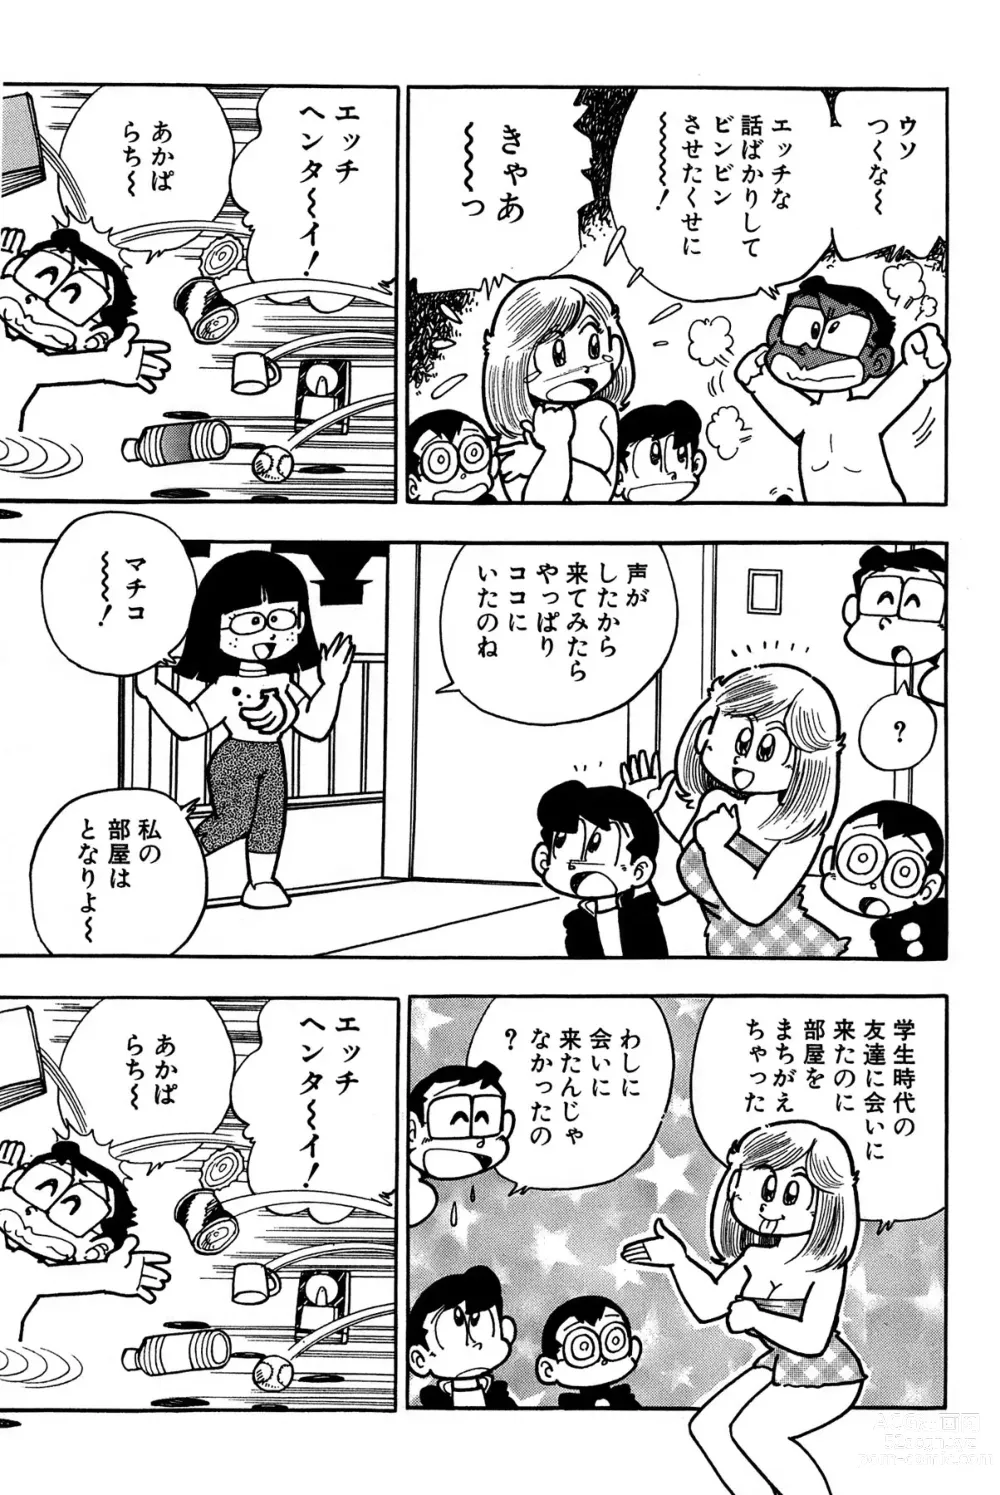 Page 223 of manga Maichiingu Machiko Sensei book pink